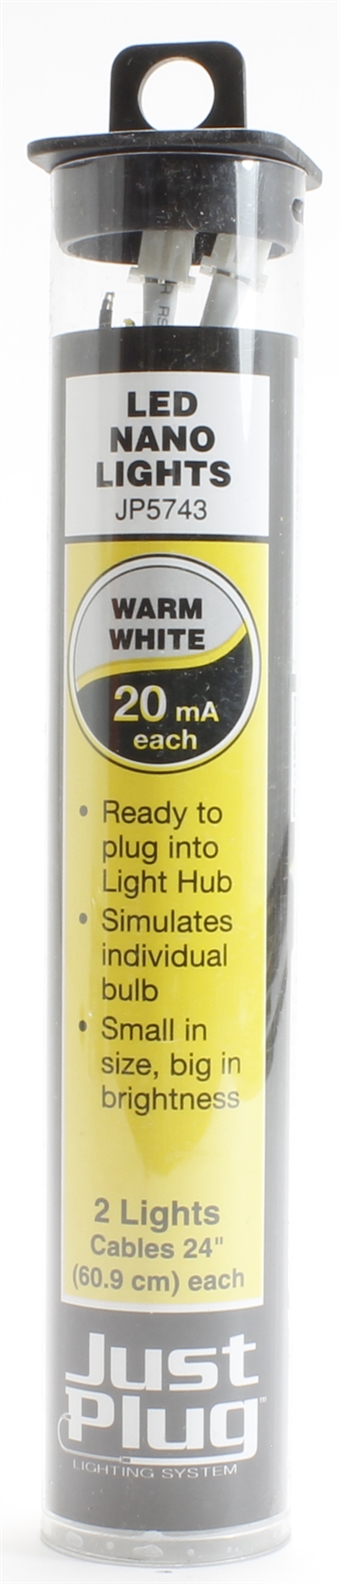 Warm white LED nano lights for Just Plug lighting system